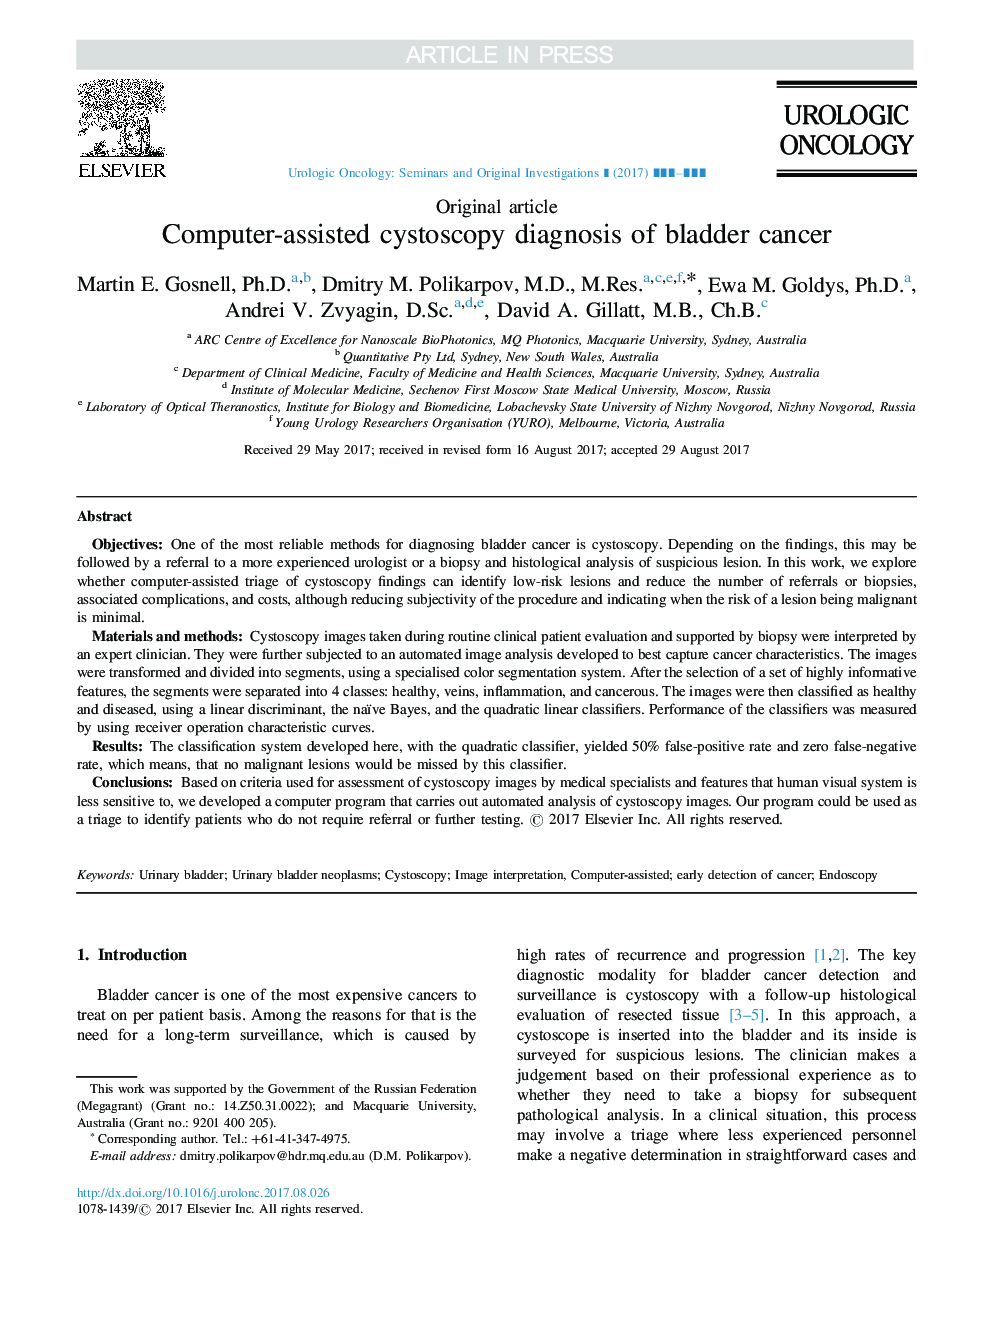 تشخیص سیستوسکوپی کامپیوتری سرطان مثانه 